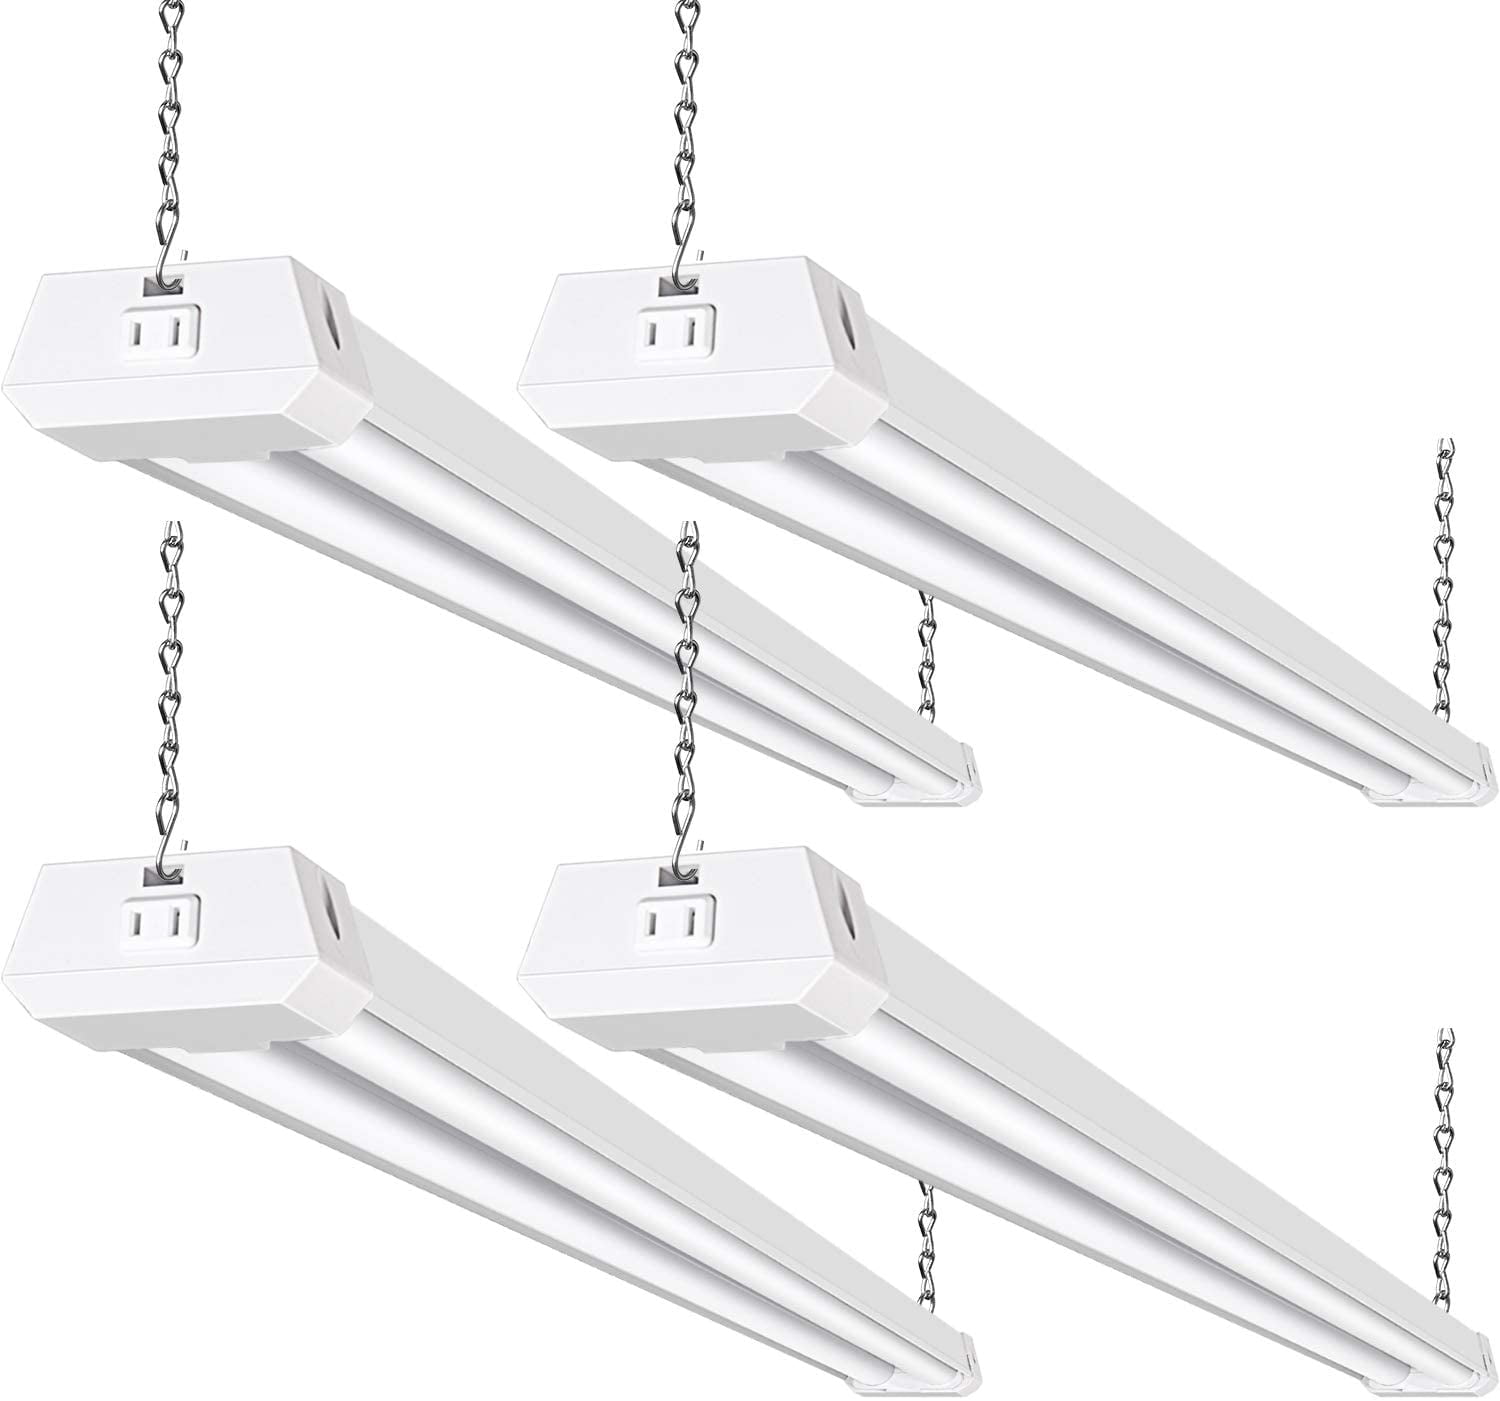 4FT Shop Light Utility LED 66W Ceiling Light Fixture 5000K Daylight USA MADE! 